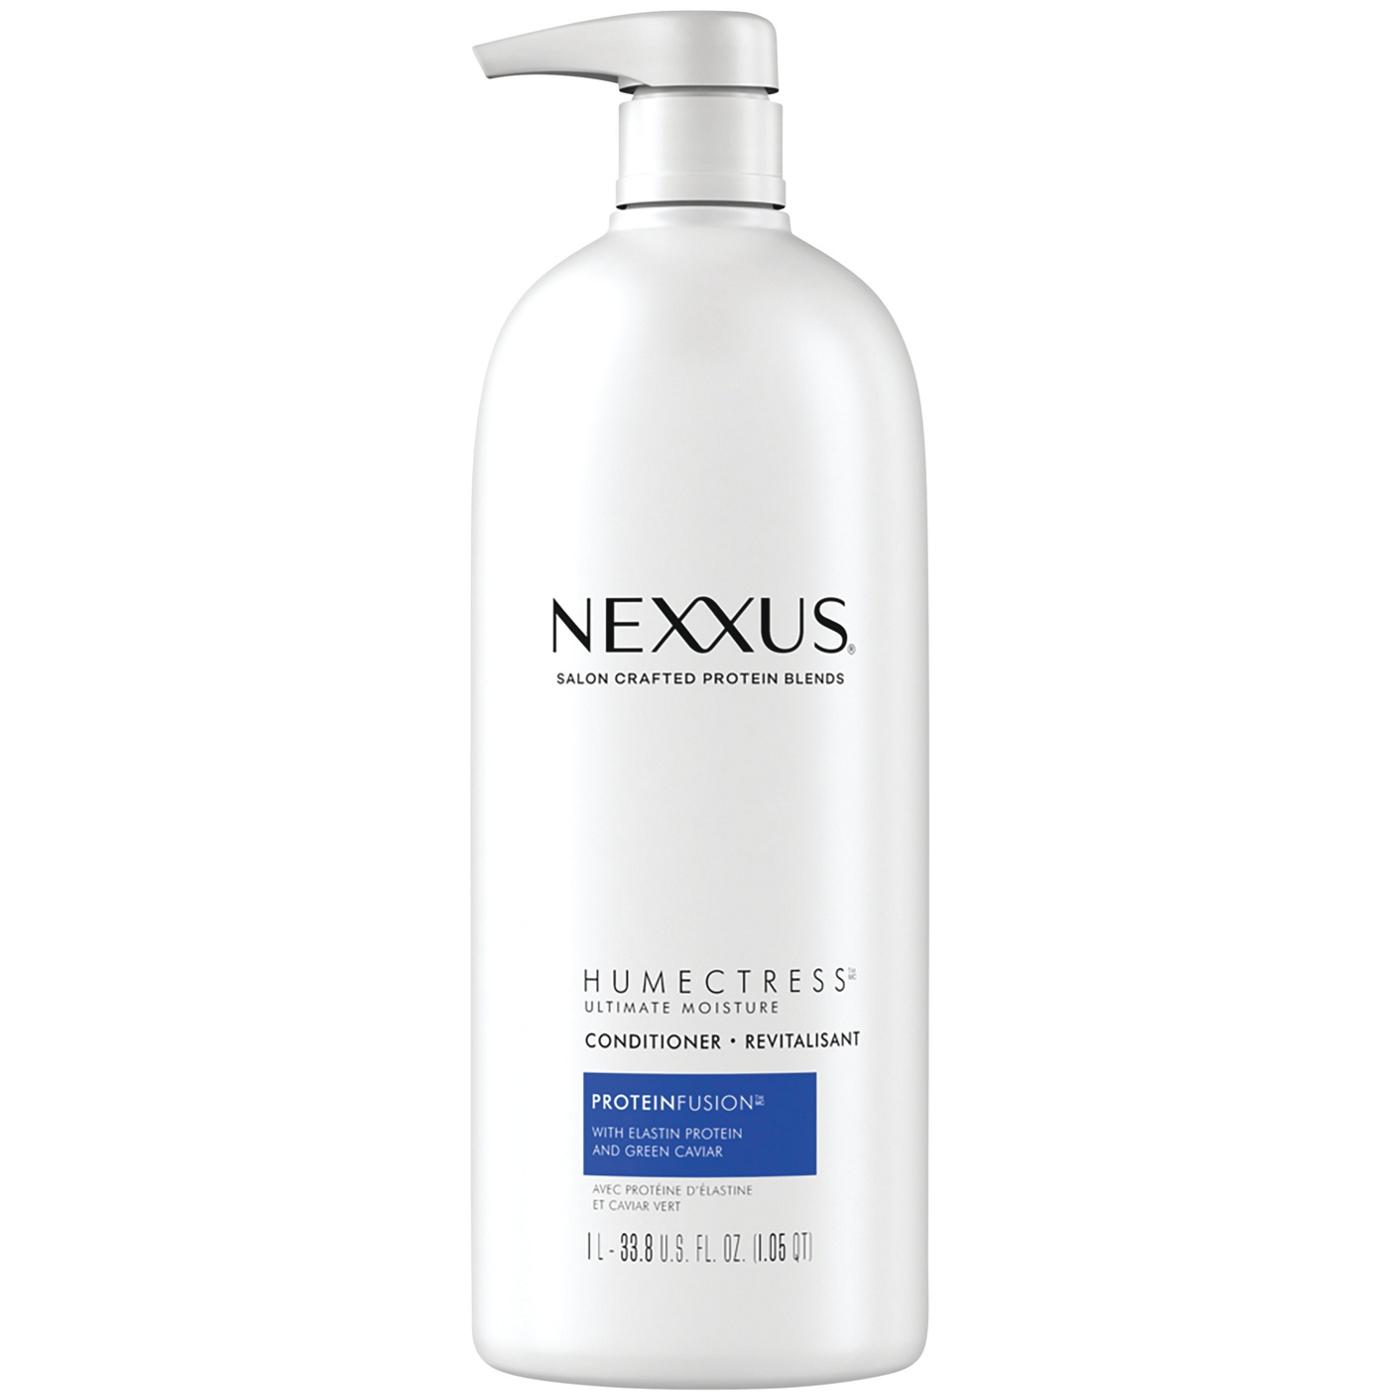 Nexxus Shampoo, Ultimate Moisture